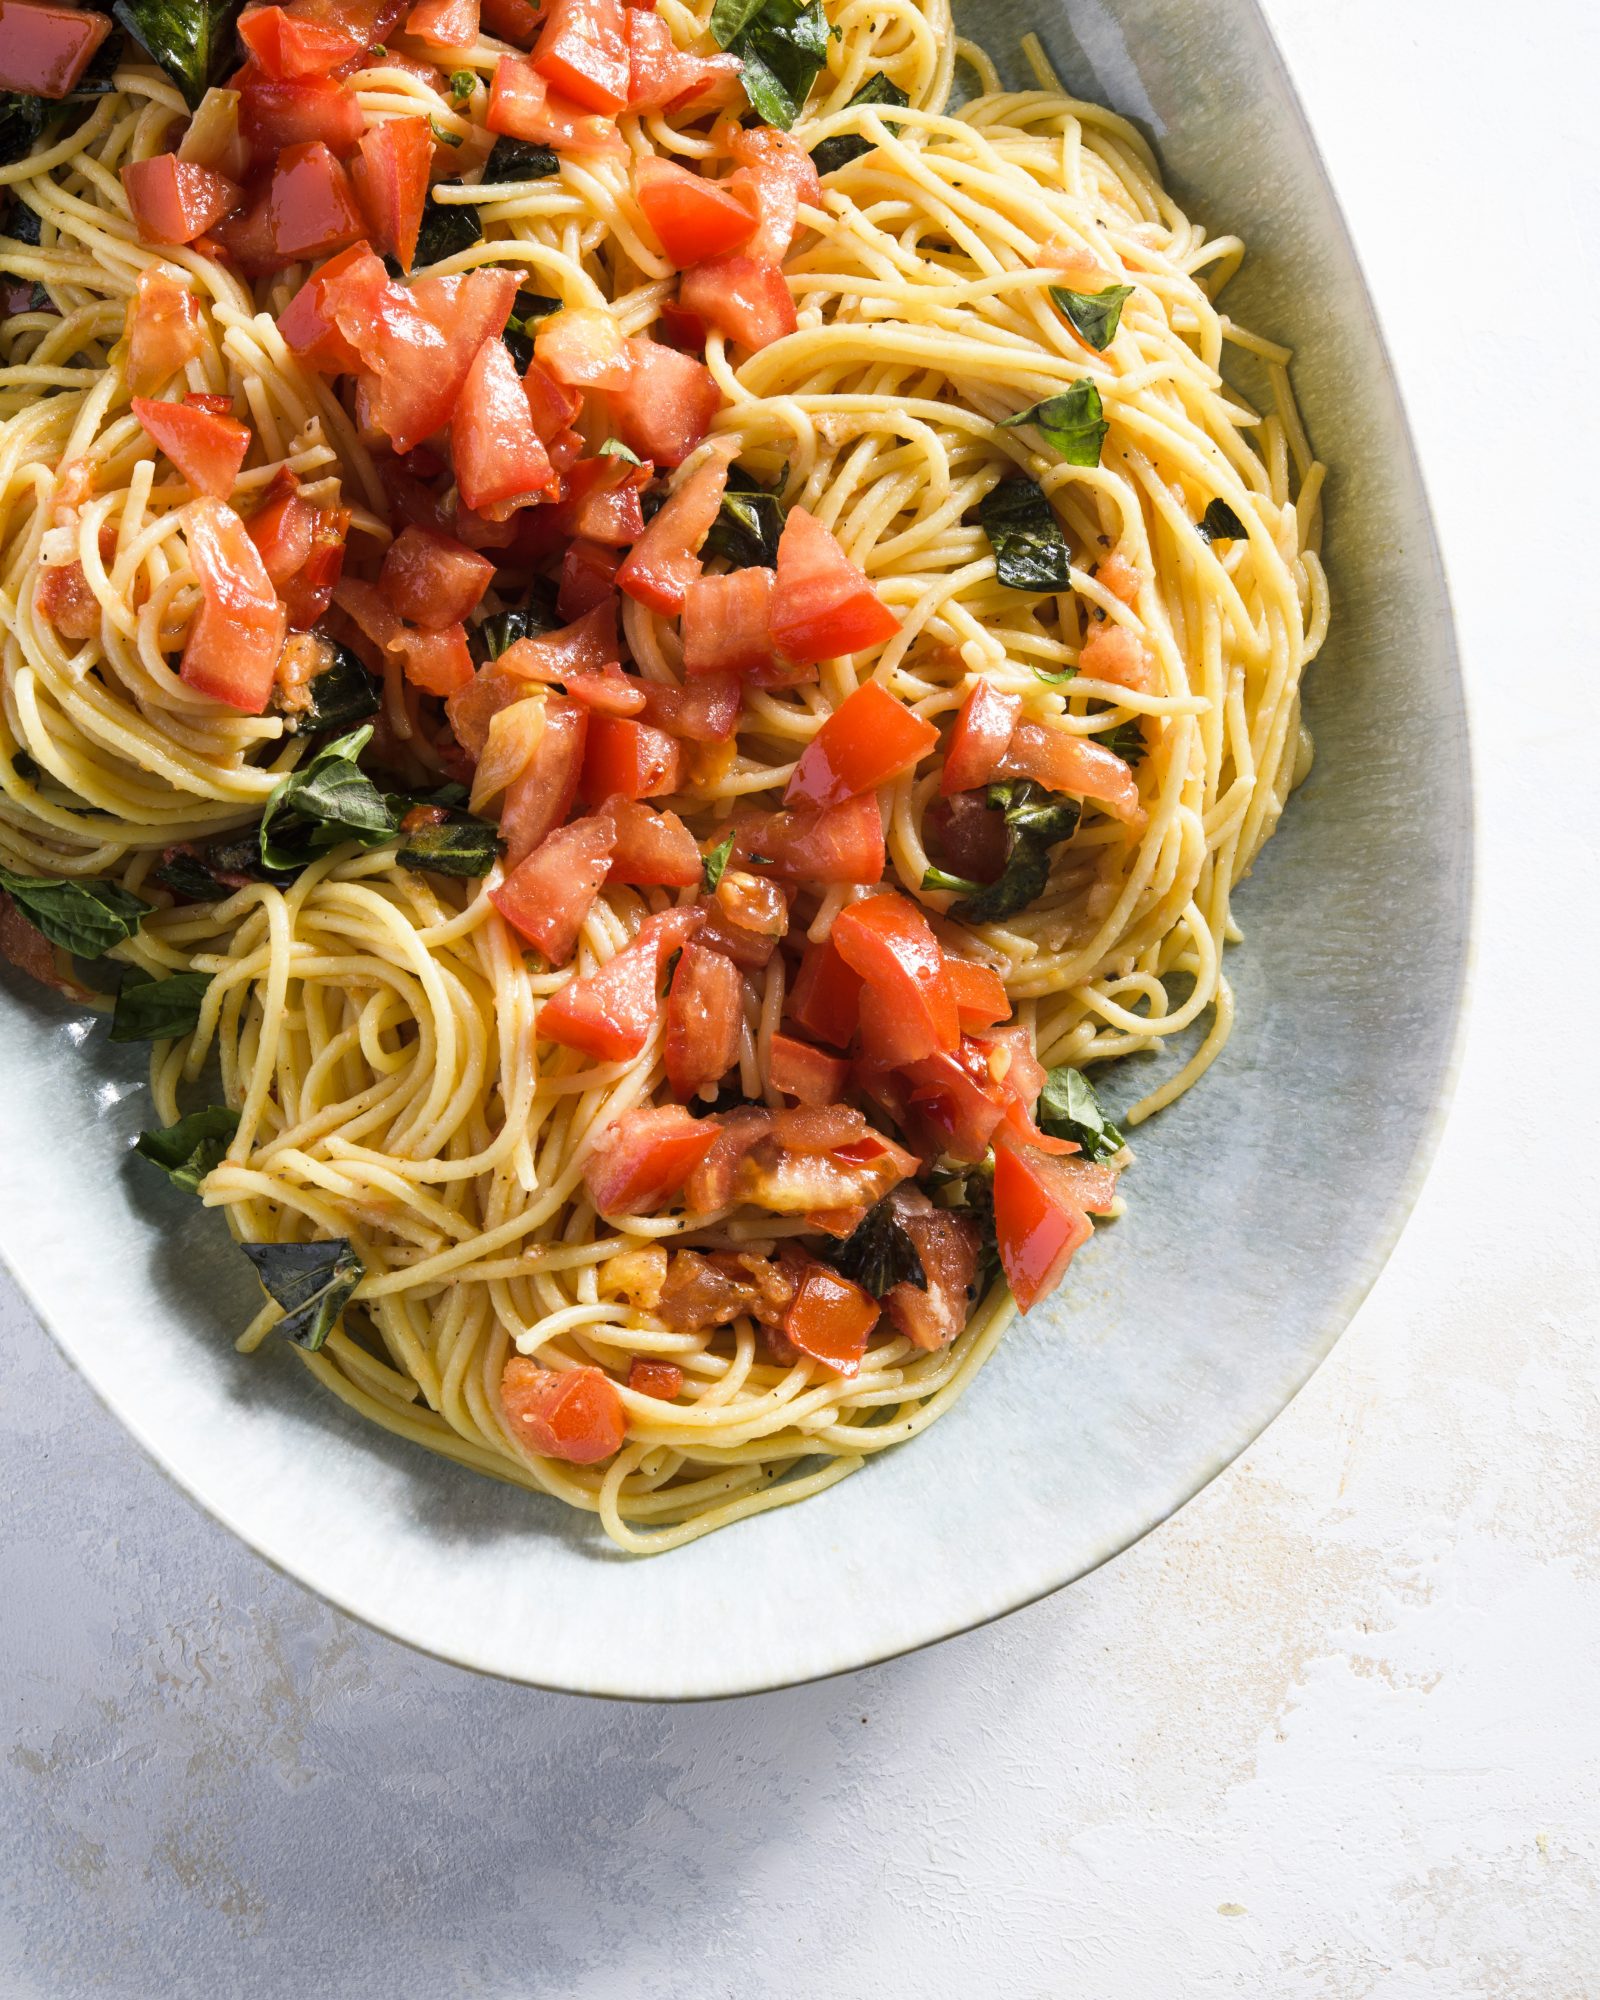 Spaghetti aglio e olio fresh tomatoes v